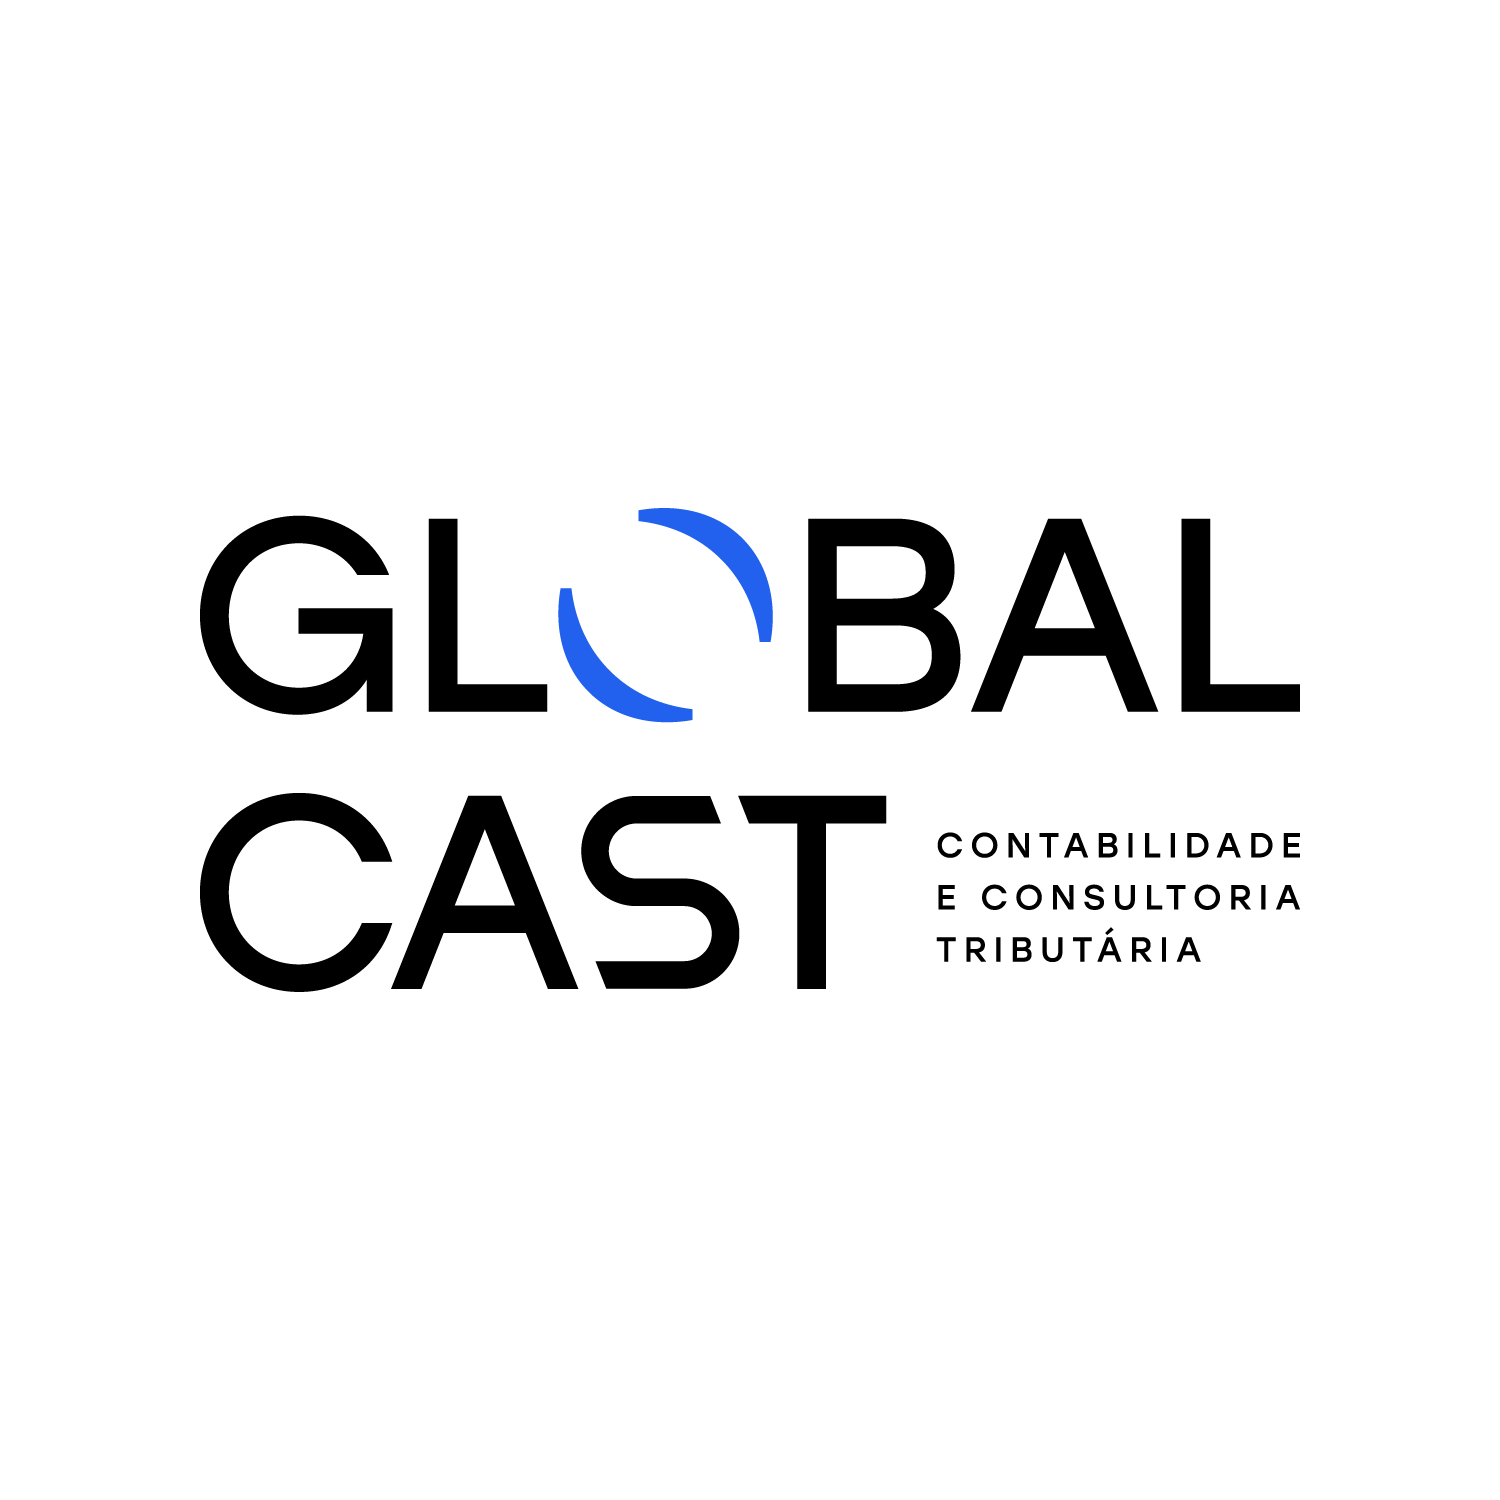 Globalcast Contabilidade e Consultoria